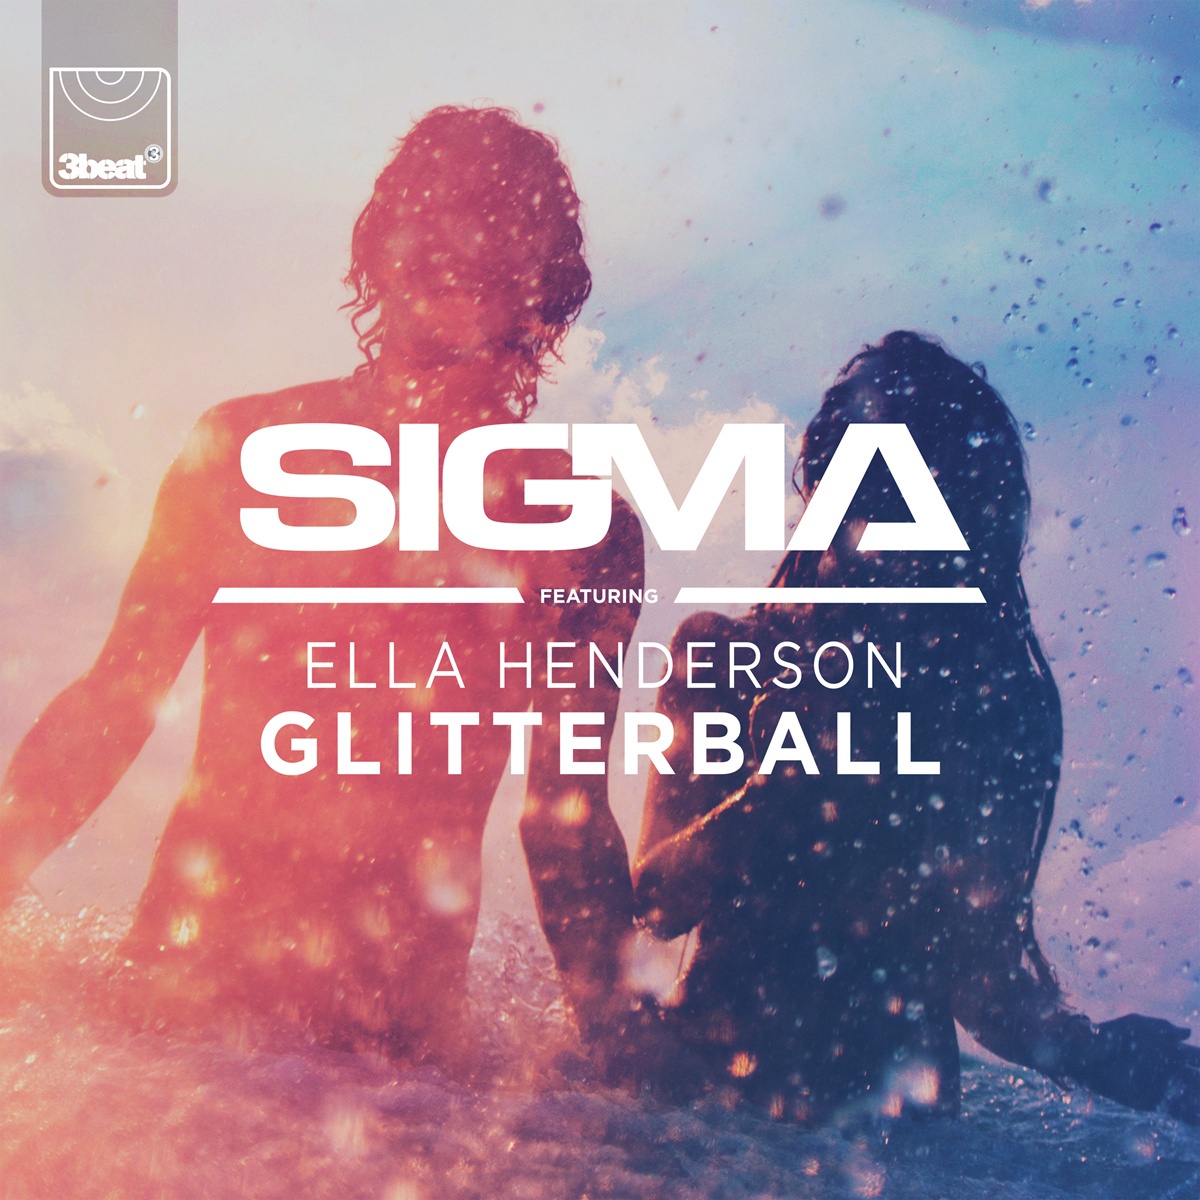 Glitterball (S.P.Y Not So Glittery Remix)